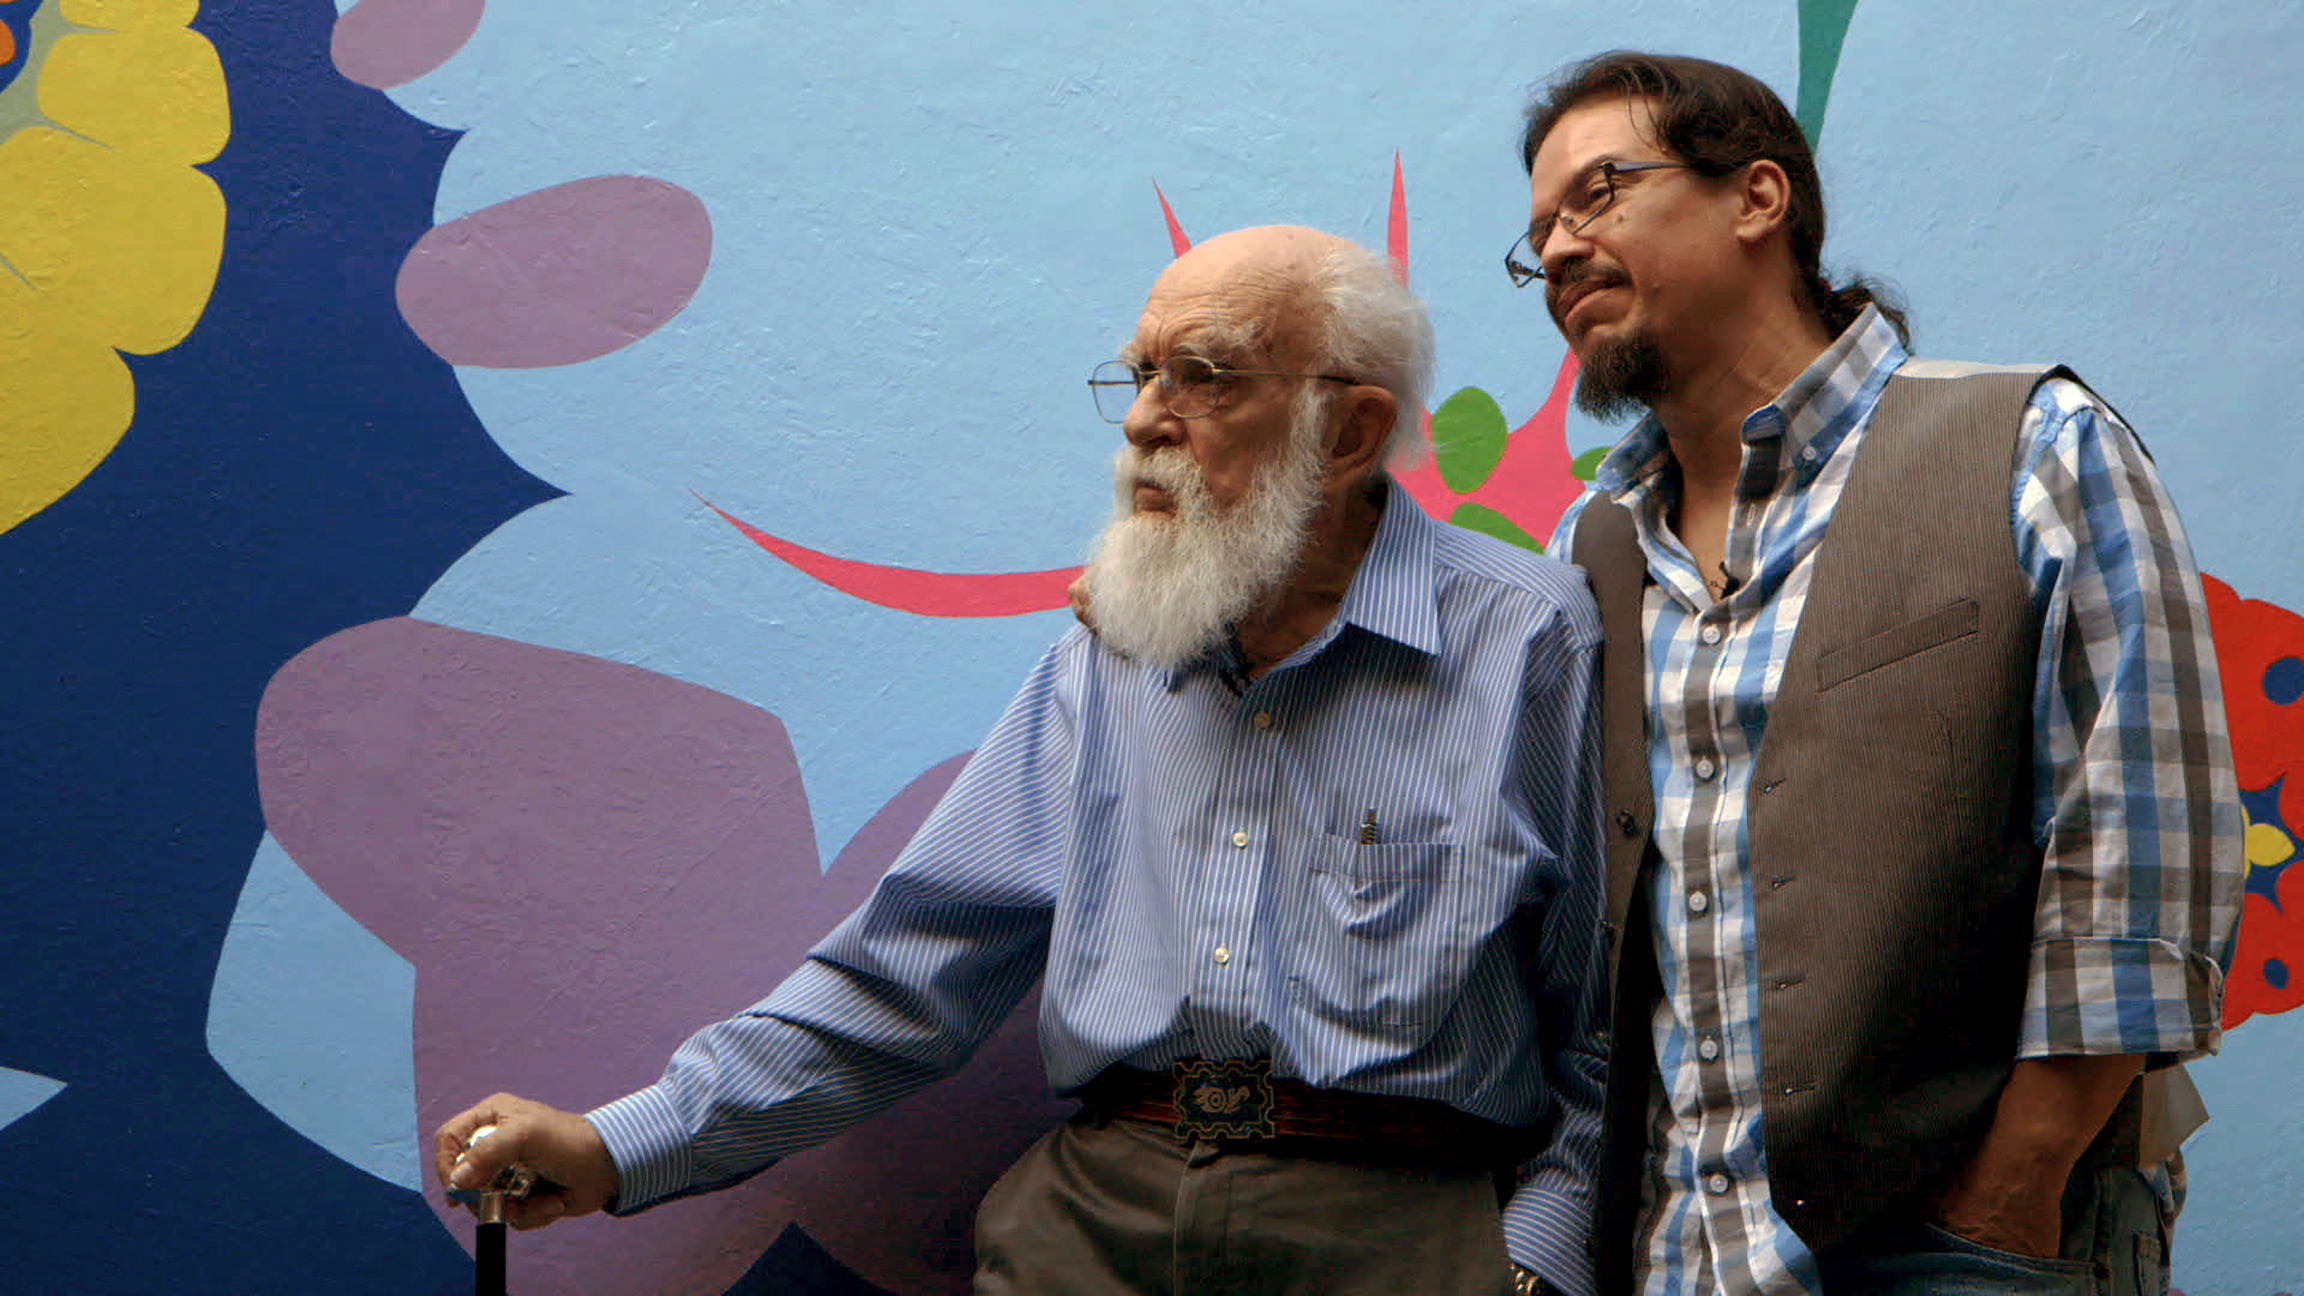 James Randi and his partner Jose Alvarez pose for An Honest Liar.